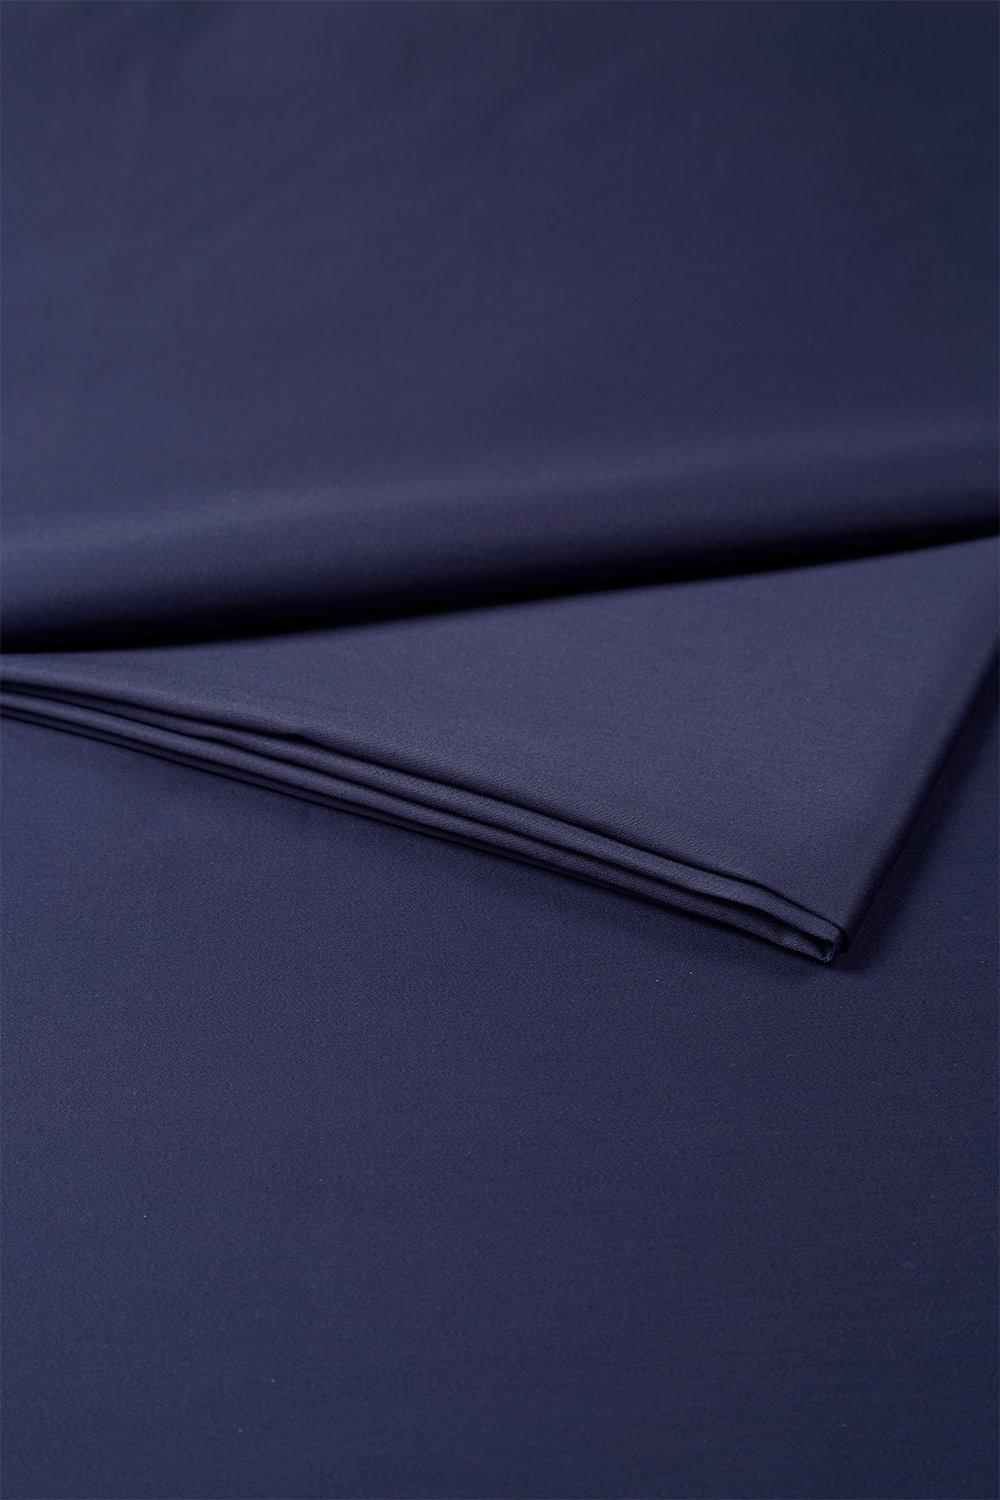 Christy 400TC Luxury Cotton Sateen Plain Dye Bedding Flat Sheets